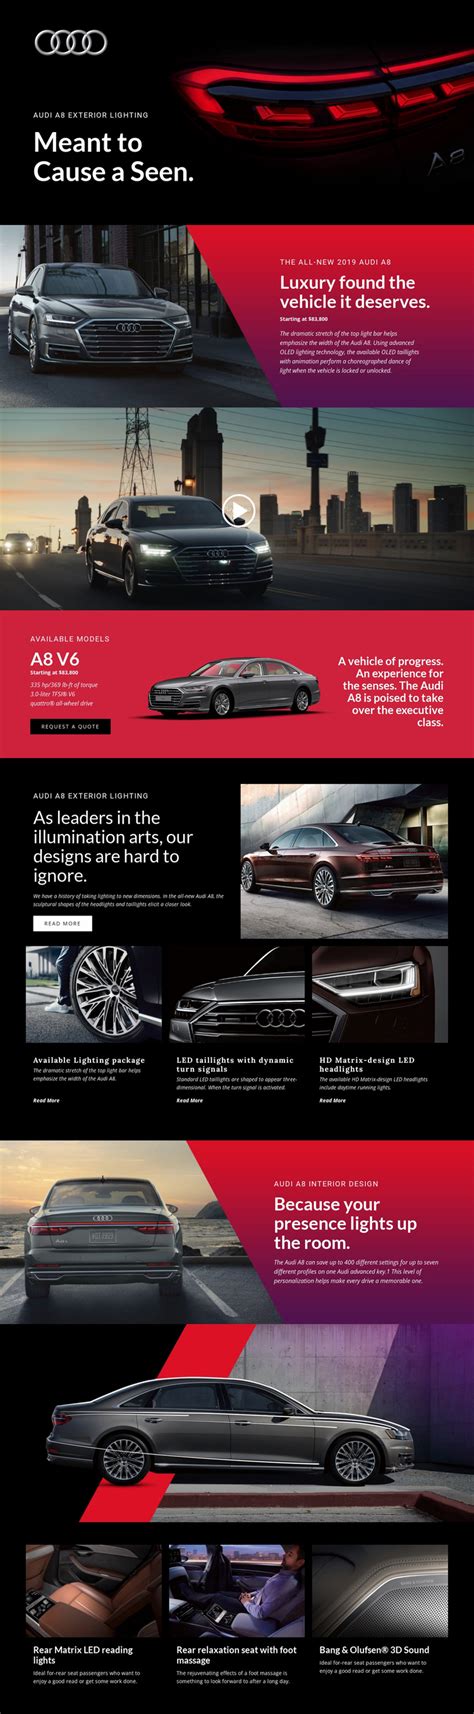 audi luxury cars website design